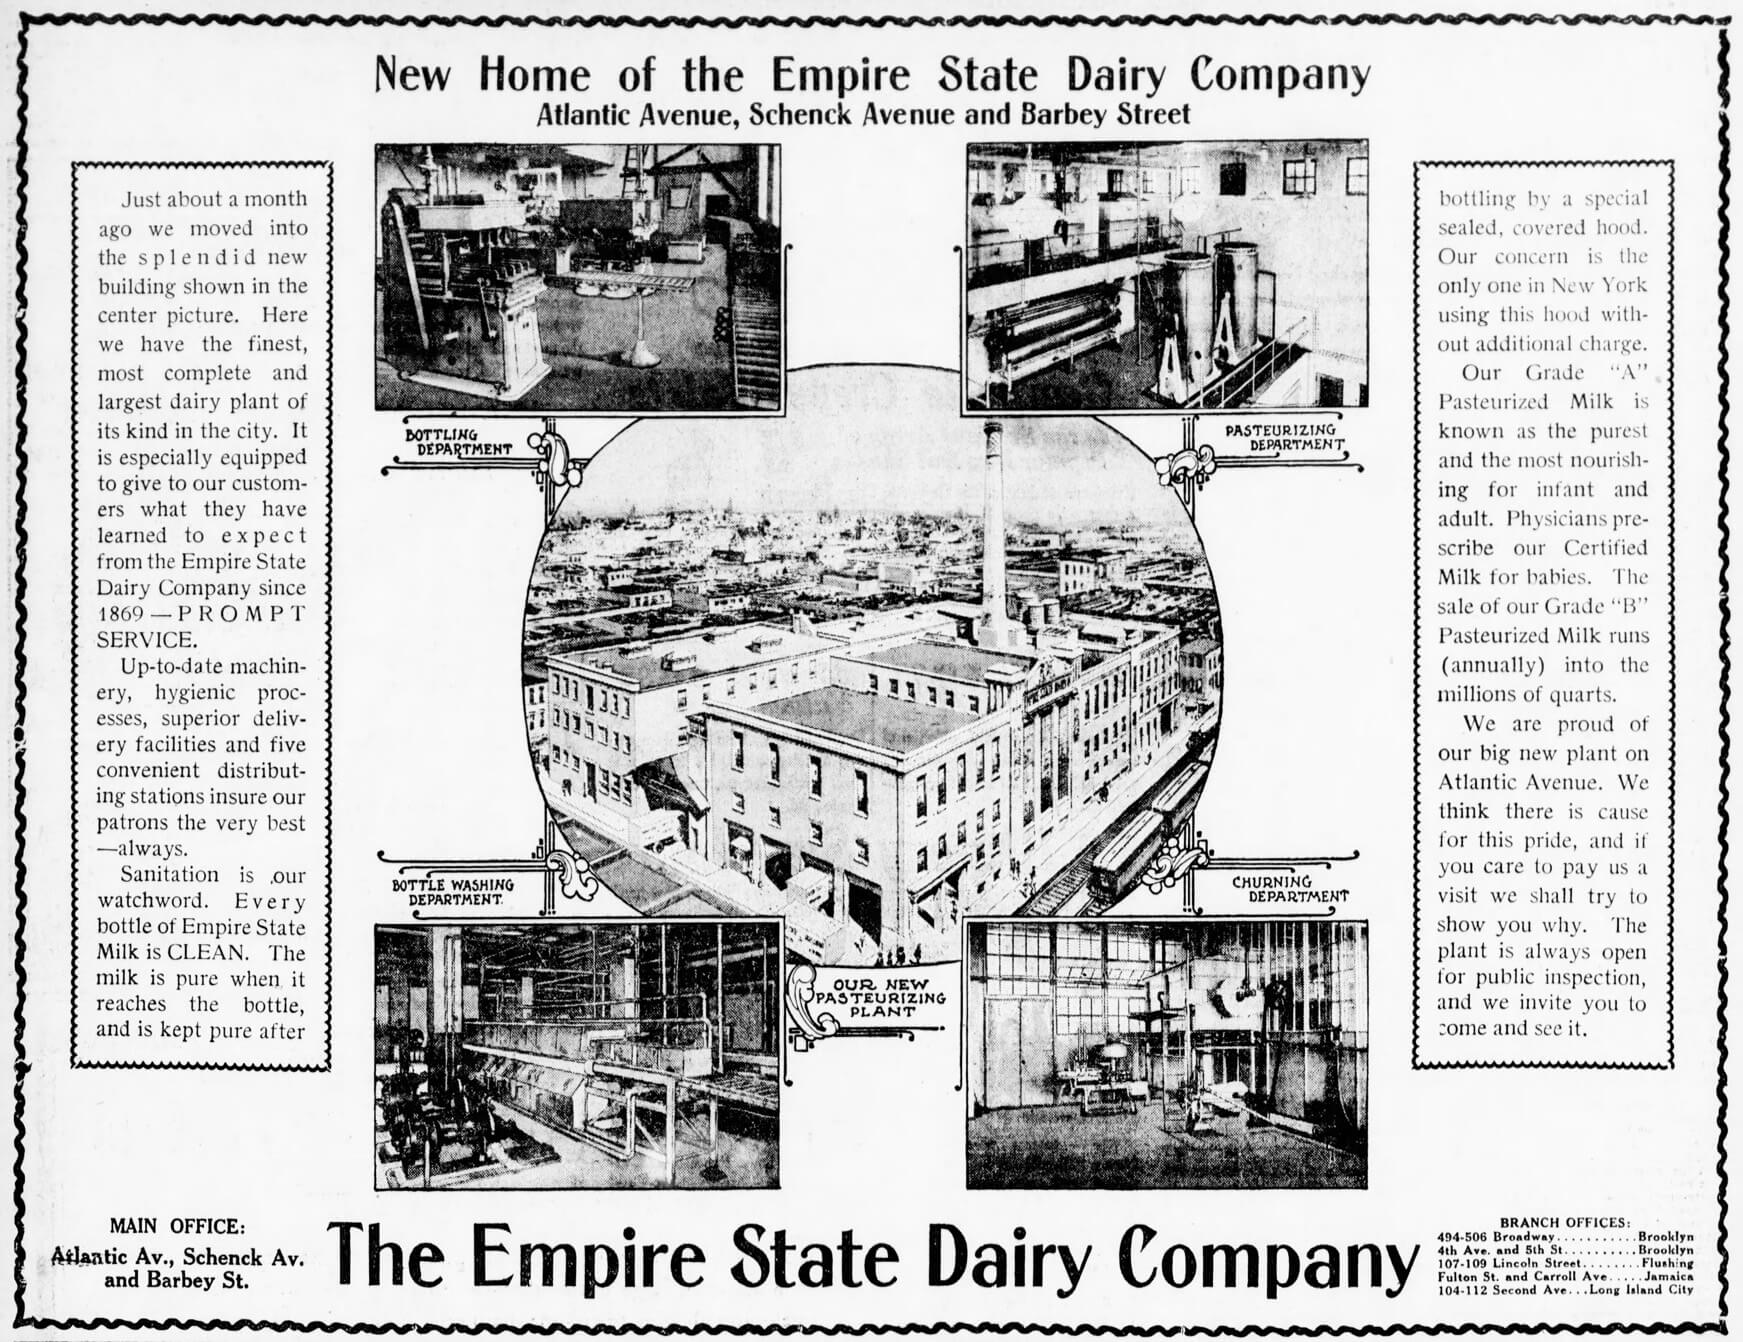 empire state dairy 2840 atlantic avenue east new york